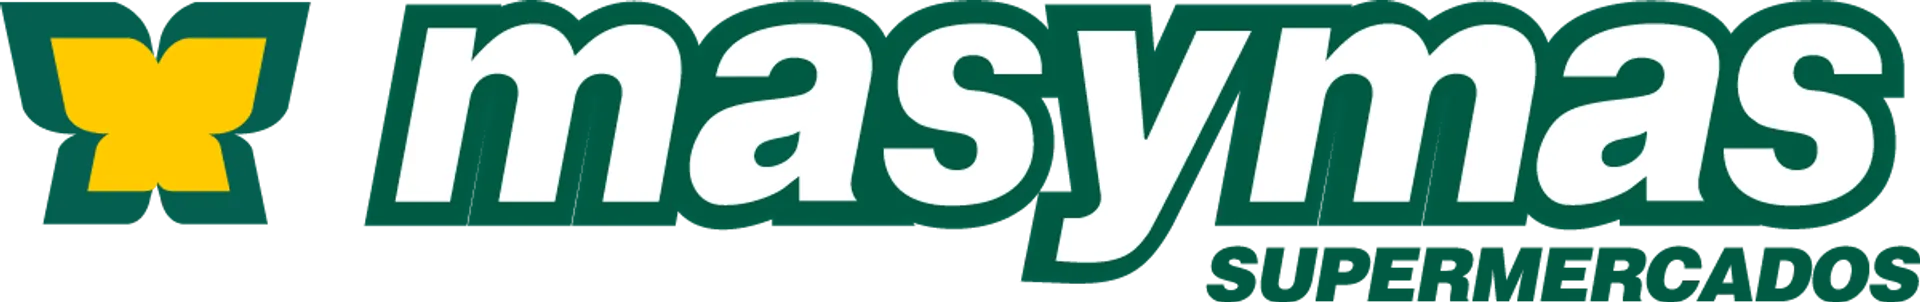 SUPERMERCADOS MASYMAS logo